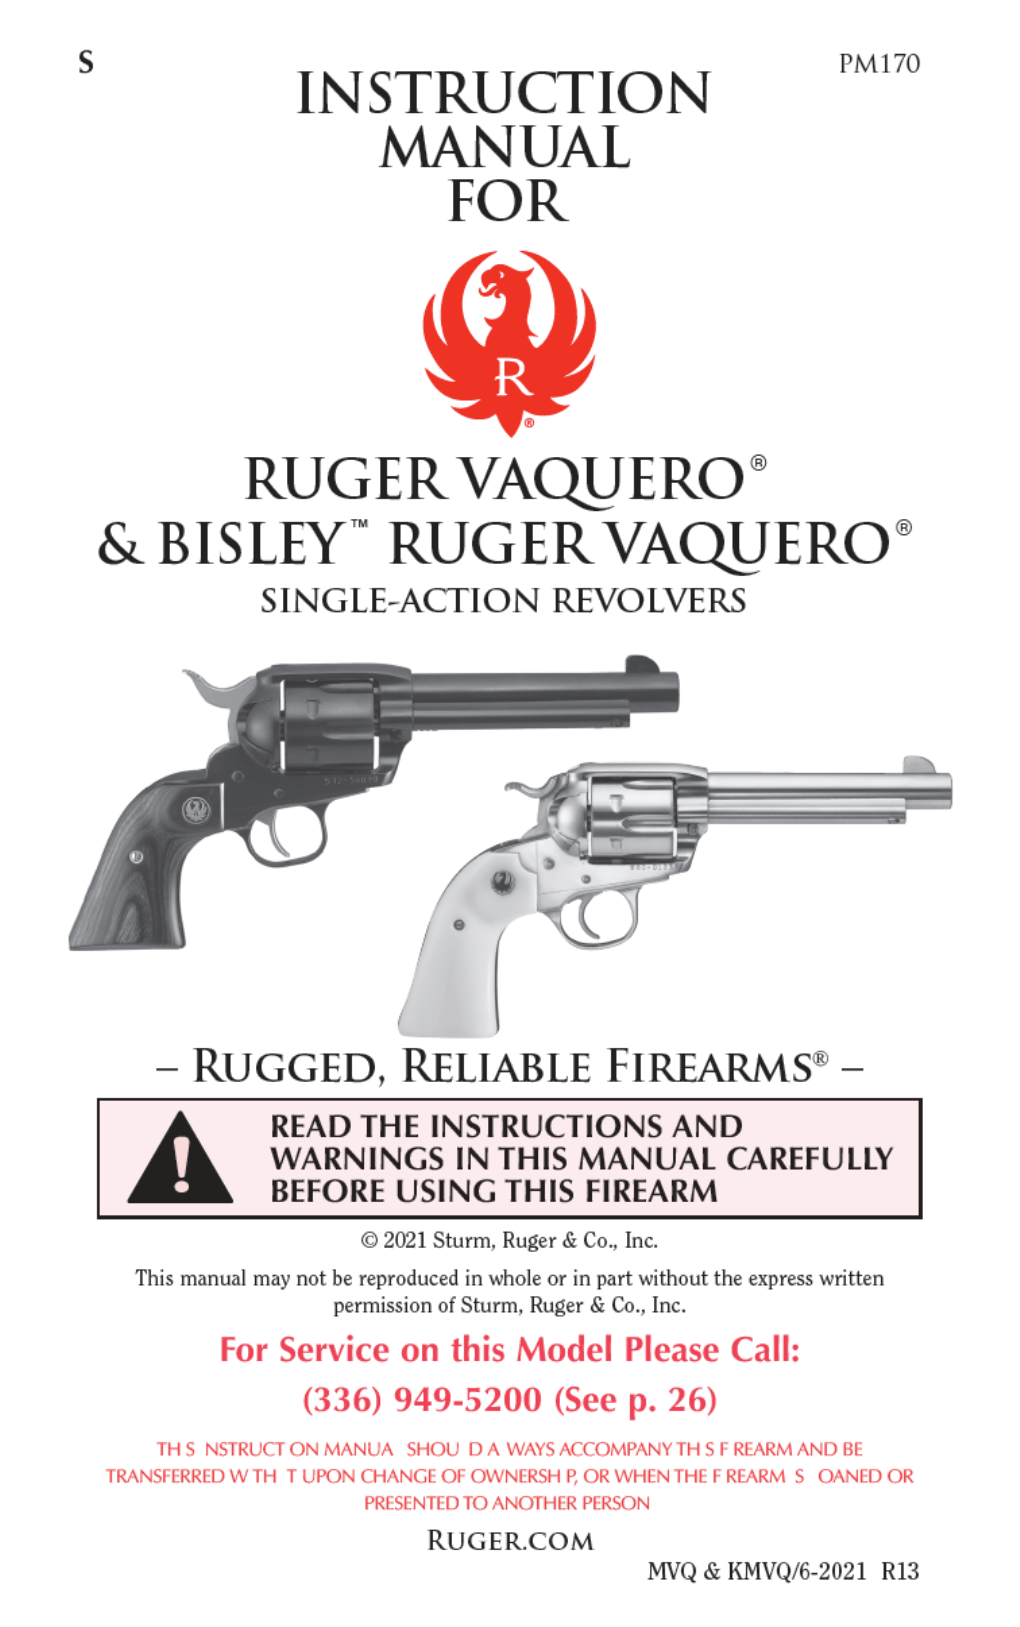 RUGER VAQUERO® Revolver Properly